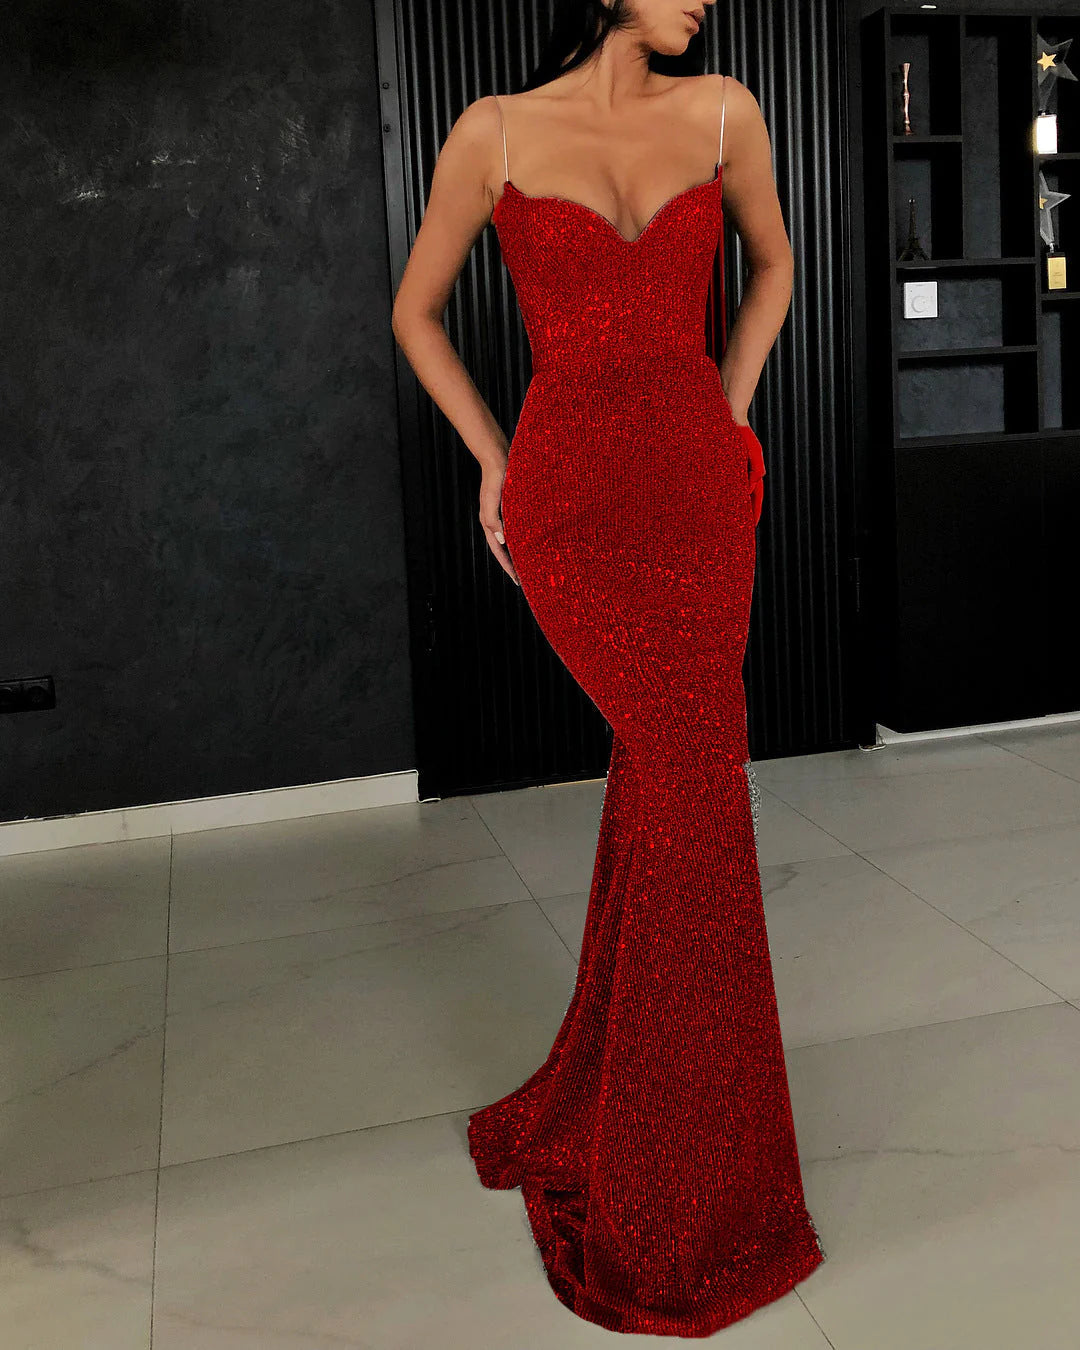 Mermaid V Neck Spaghetti Straps Sequin Black Sparkle Prom Dresses